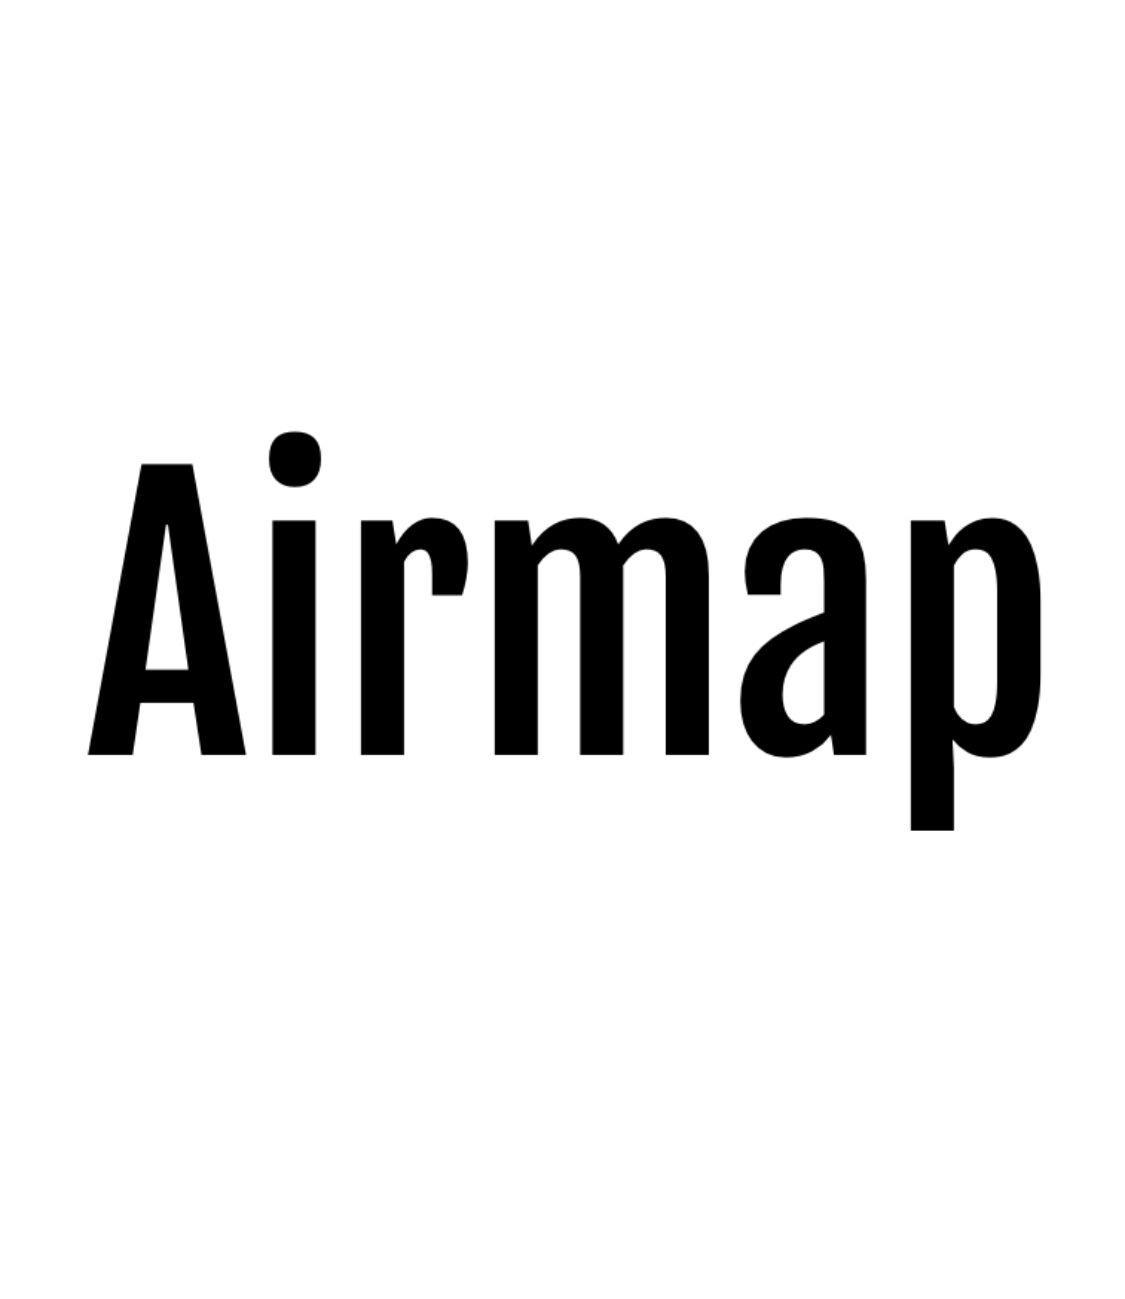 AIRMAP